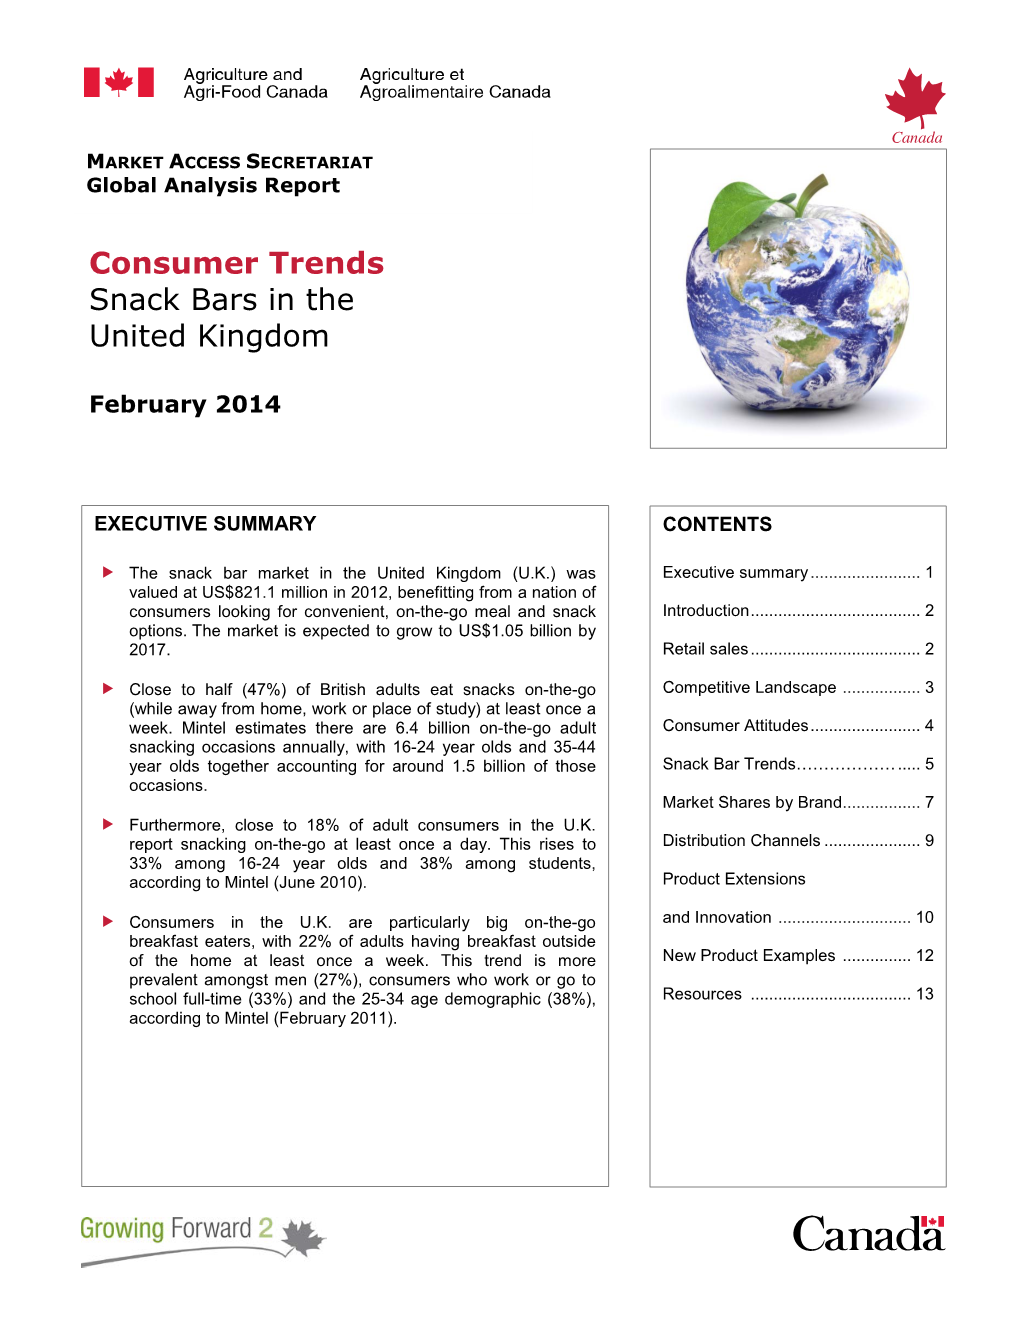 Consumer Trends Snack Bars in the United Kingdom